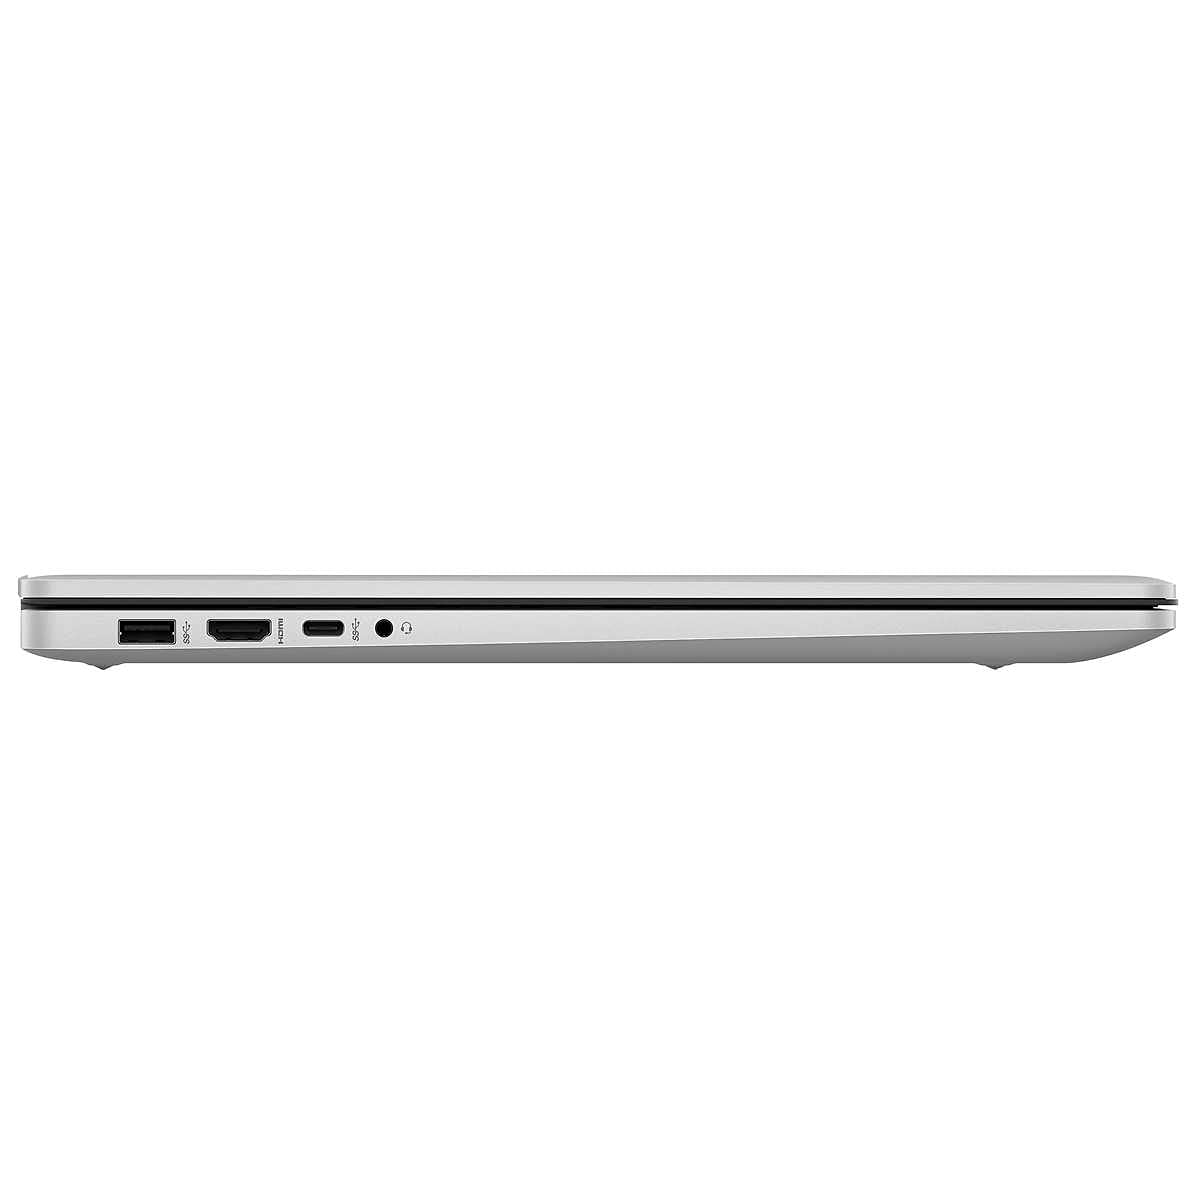 2022 HP High Performance Business Laptop - 17.3